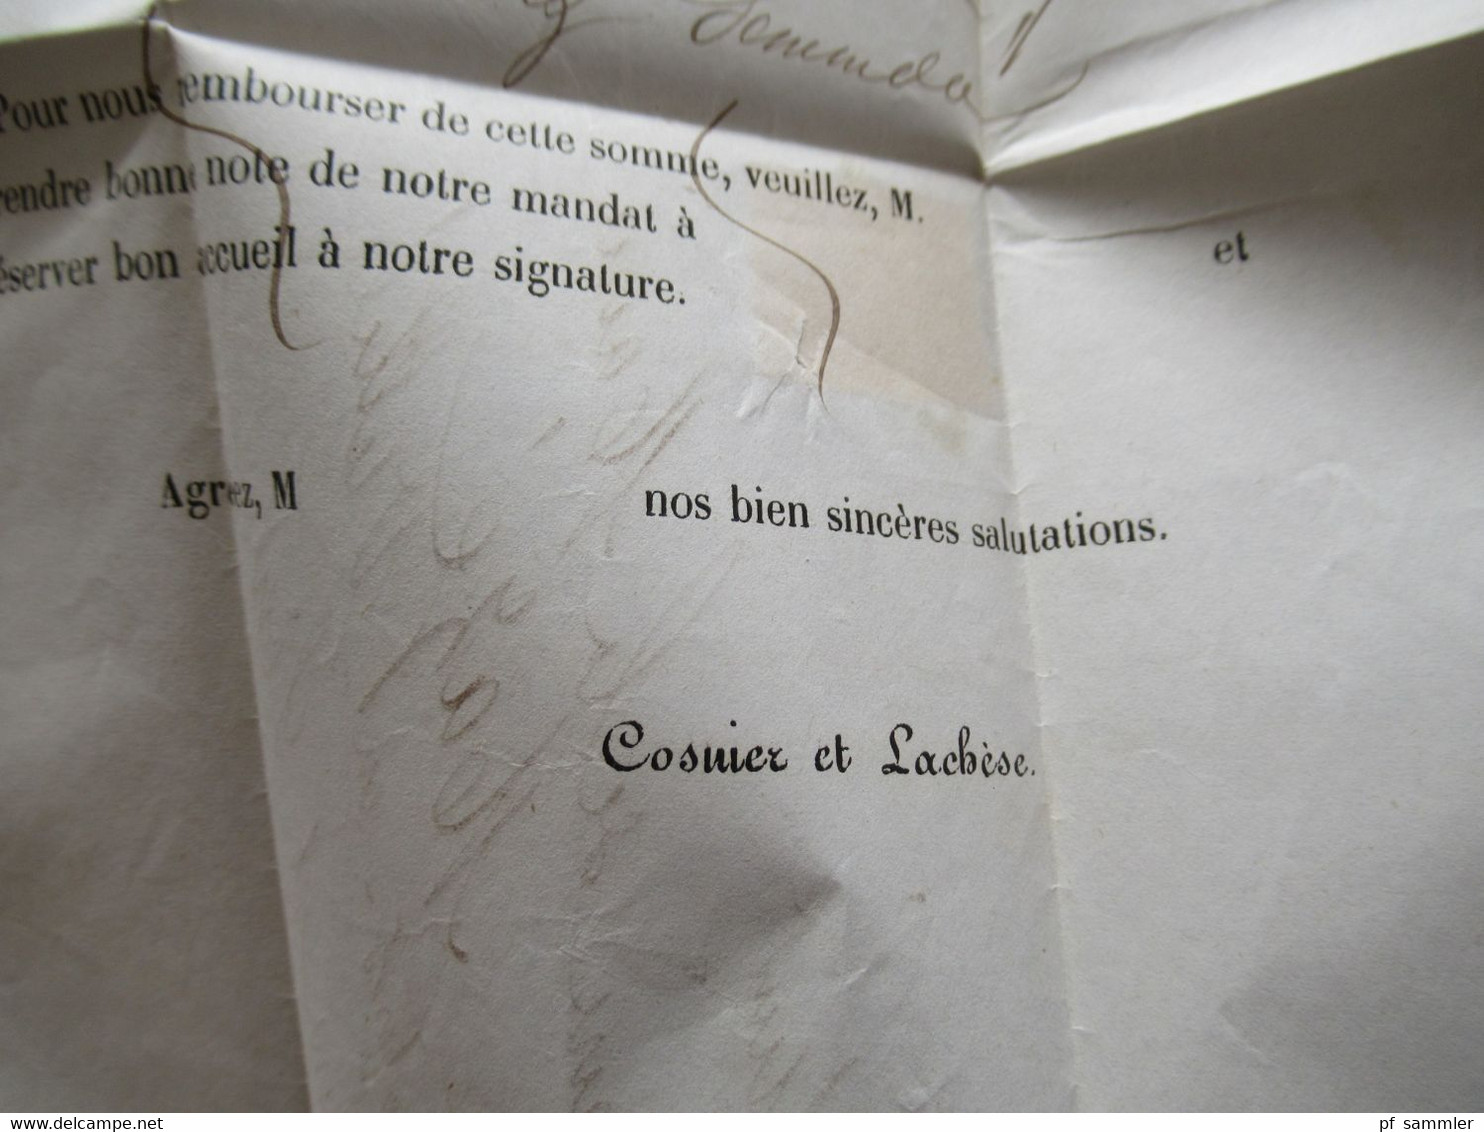 1862 Napoleon III. Nr.13 II Rautenstempel gedruckter Brief Imprimerie, Librairie et Lithographie de Cosnier Et Lachese